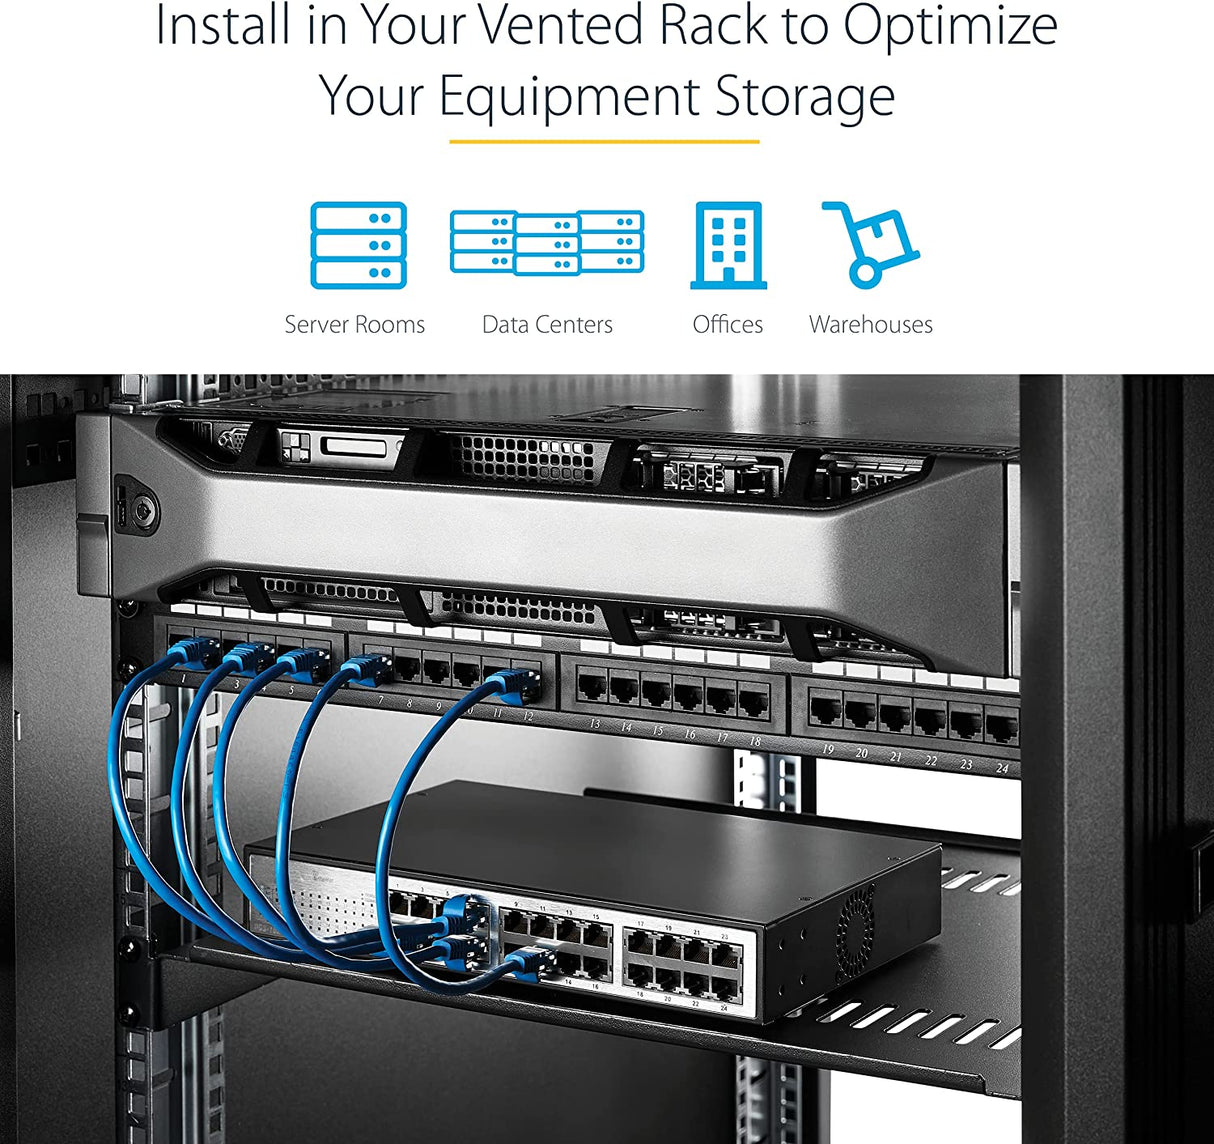 StarTech.com 1U Server Rack Shelf - Universal Vented Rack Mount Cantilever Tray for 19" Network Equipment Rack &amp; Cabinet - Heavy Duty Steel - Weight Capacity 44lb/20kg - 7" Deep Shelf (CABSHELF1U7V) 1U 7" Depth